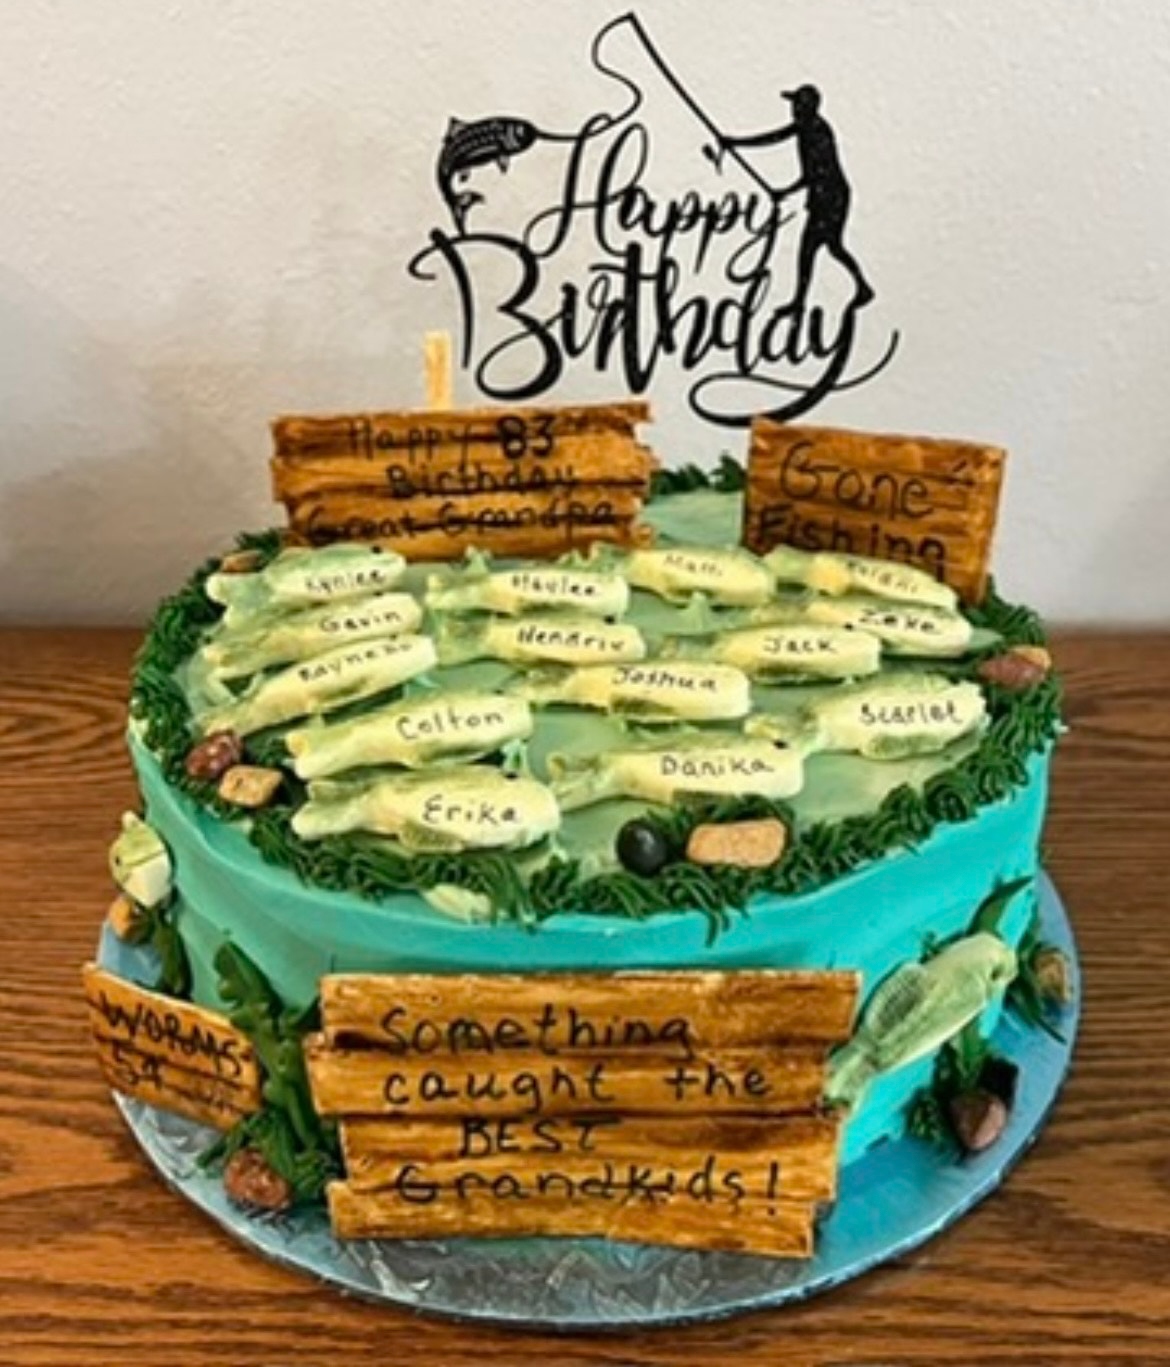 A fishing-themed birthday cake